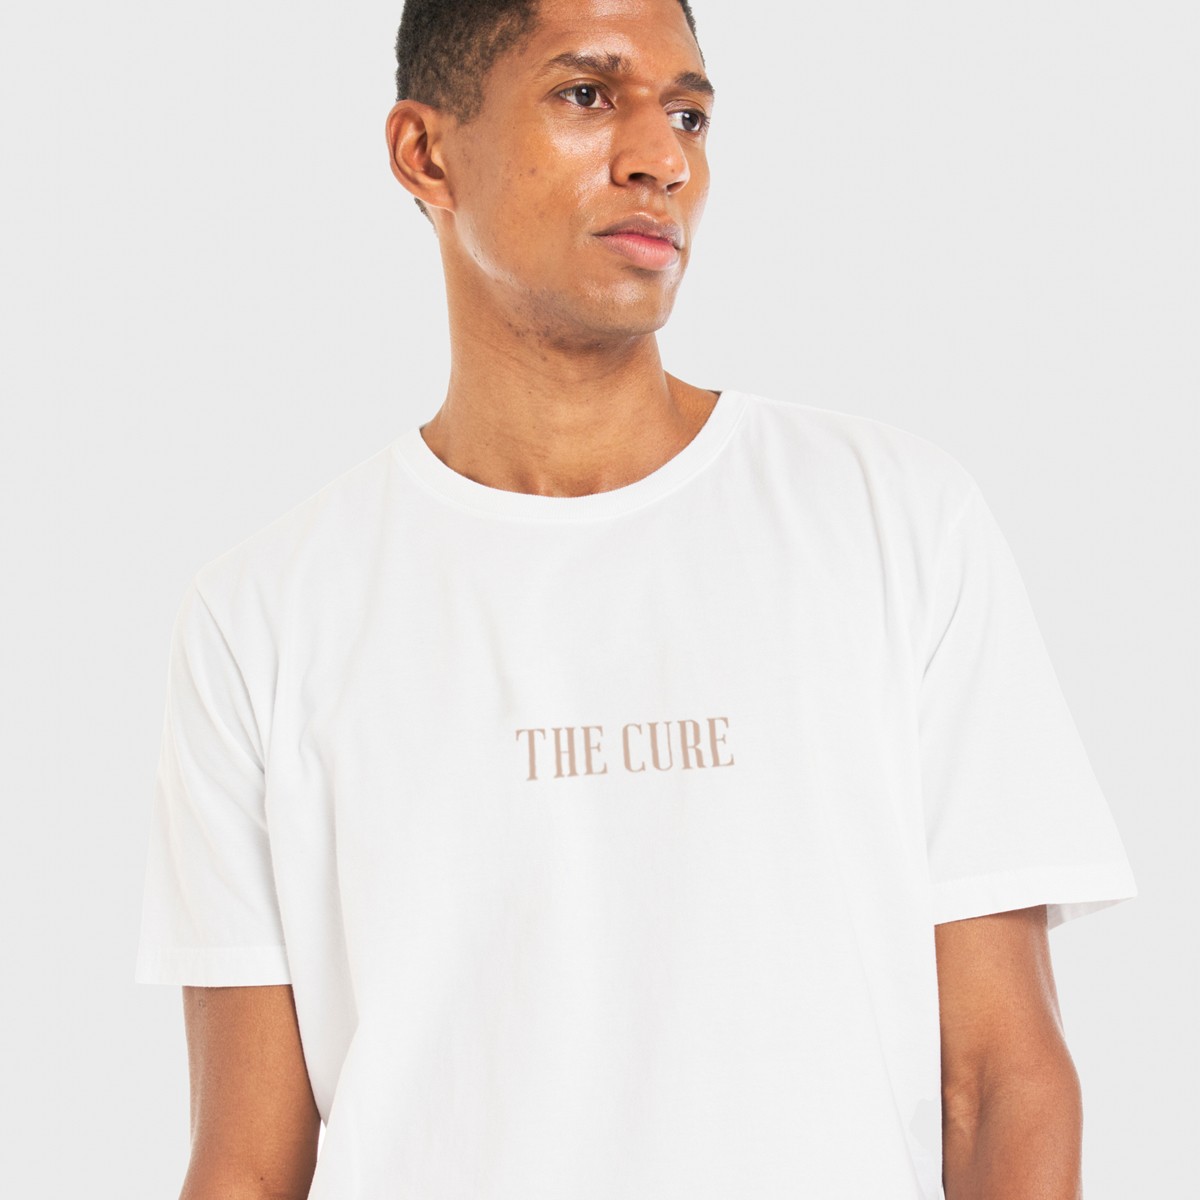 Camiseta Aragäna | The Cure